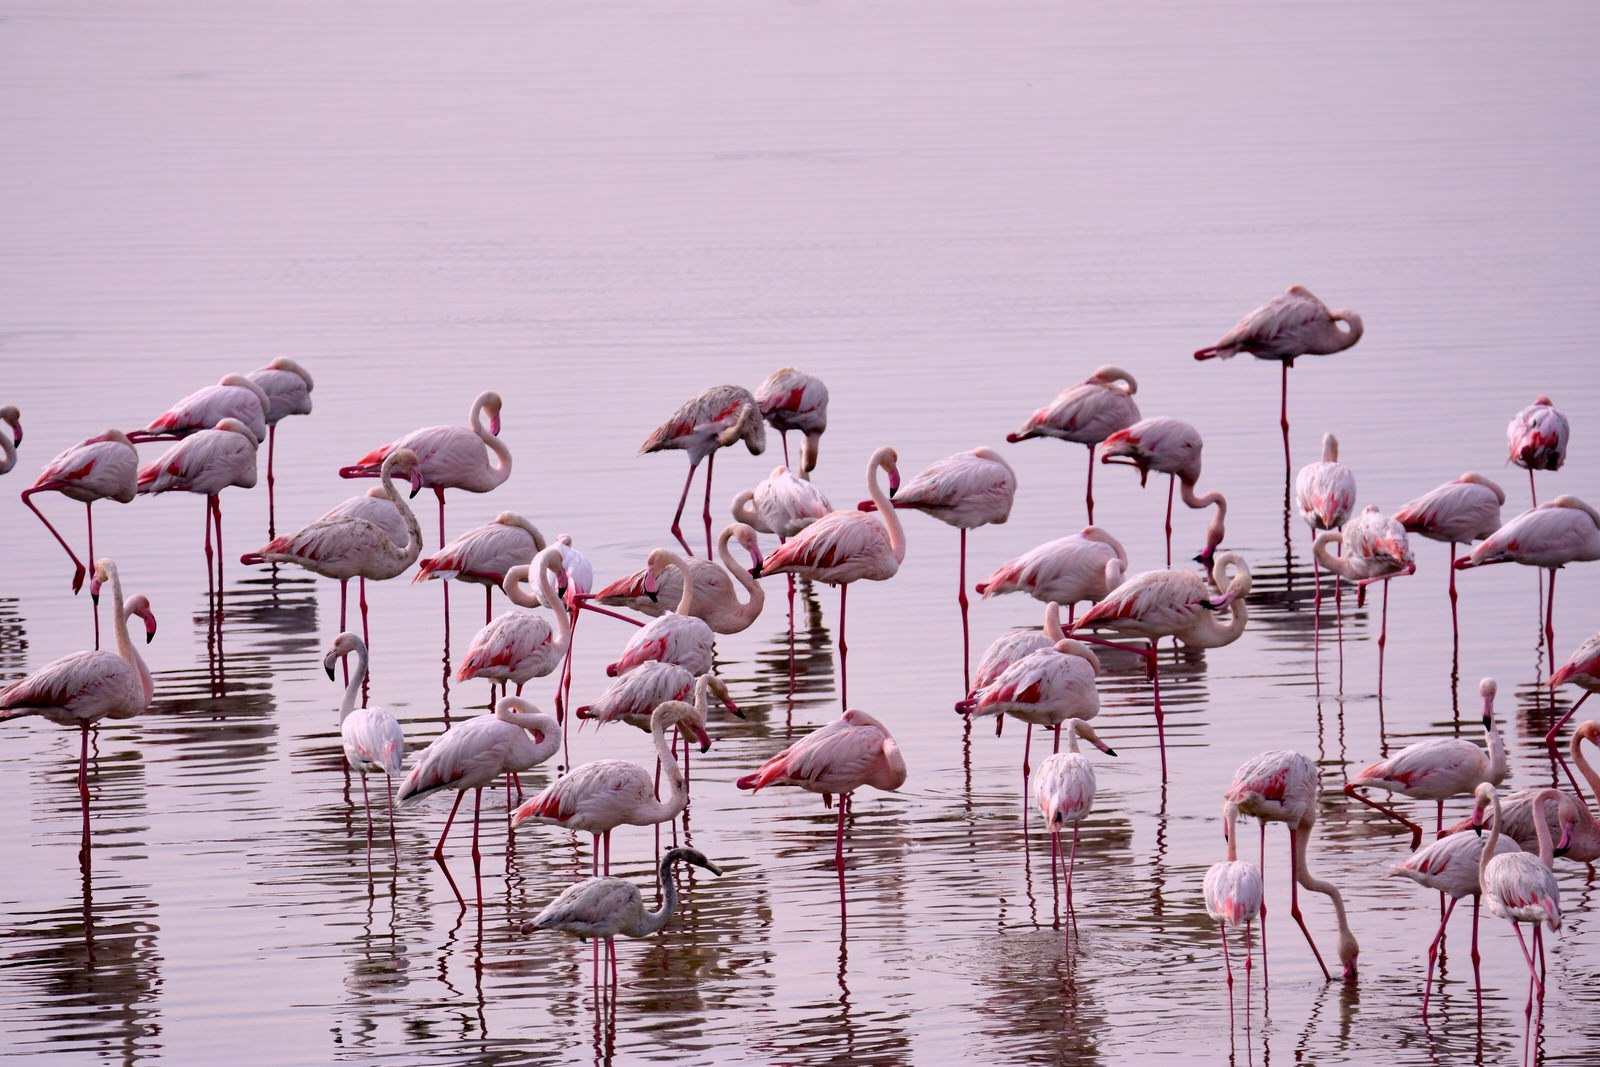 Thousands of flamingos gather at Abu Dhabi's Al Wathba Wetlands